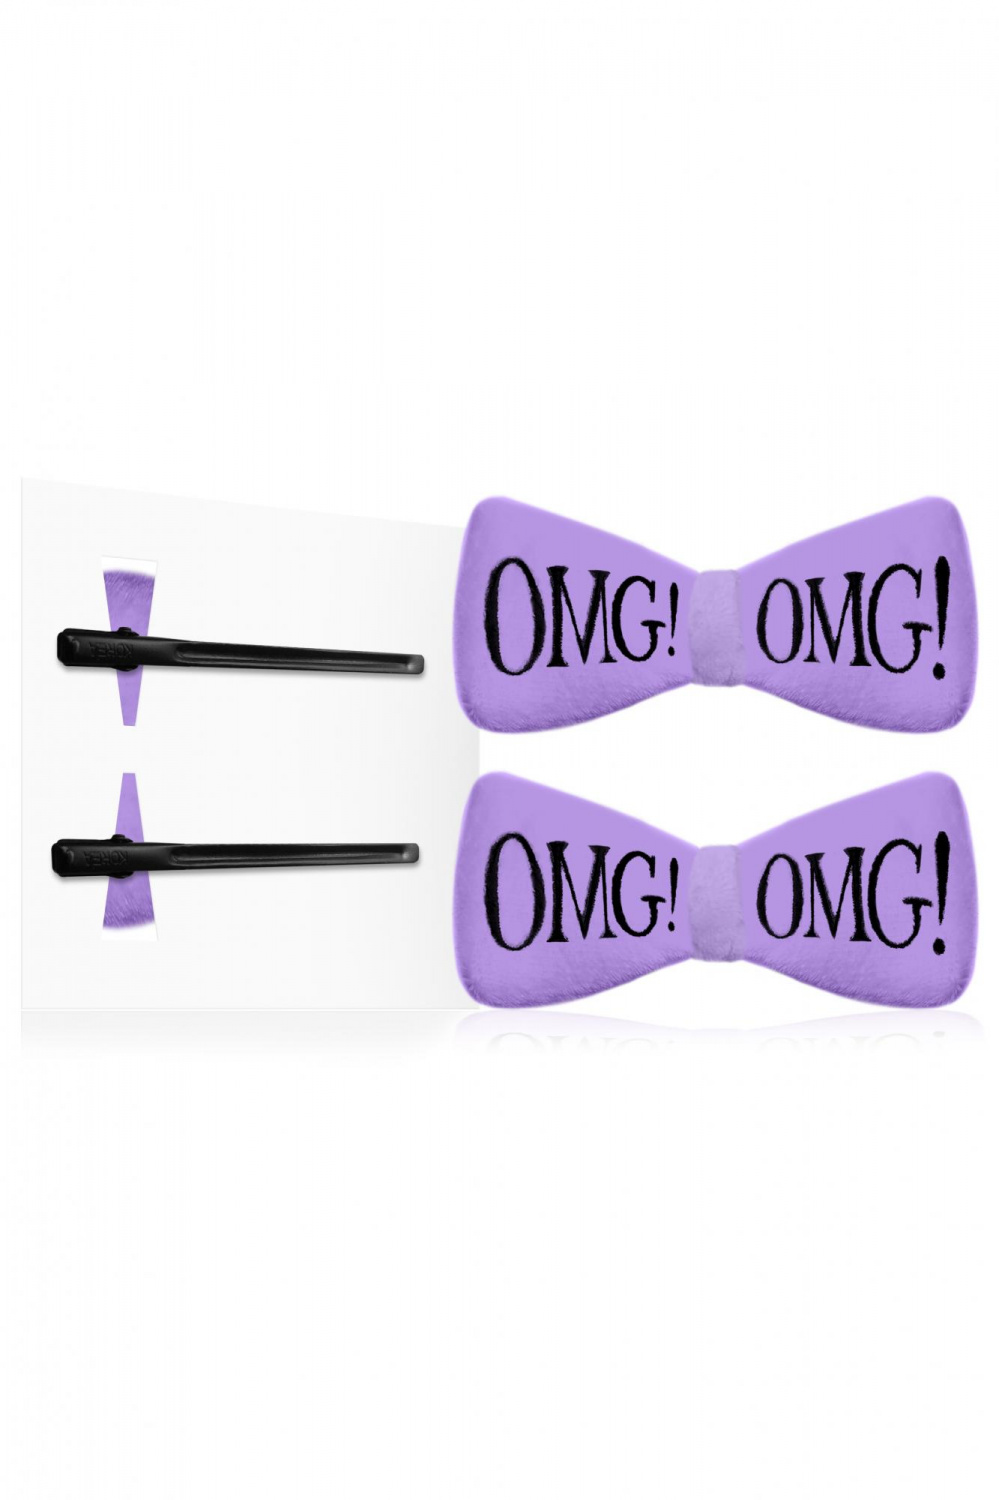 Double Dare OMG! Hair Up Bow Pin Purple - интернет-магазин профессиональной косметики Spadream, изображение 40783